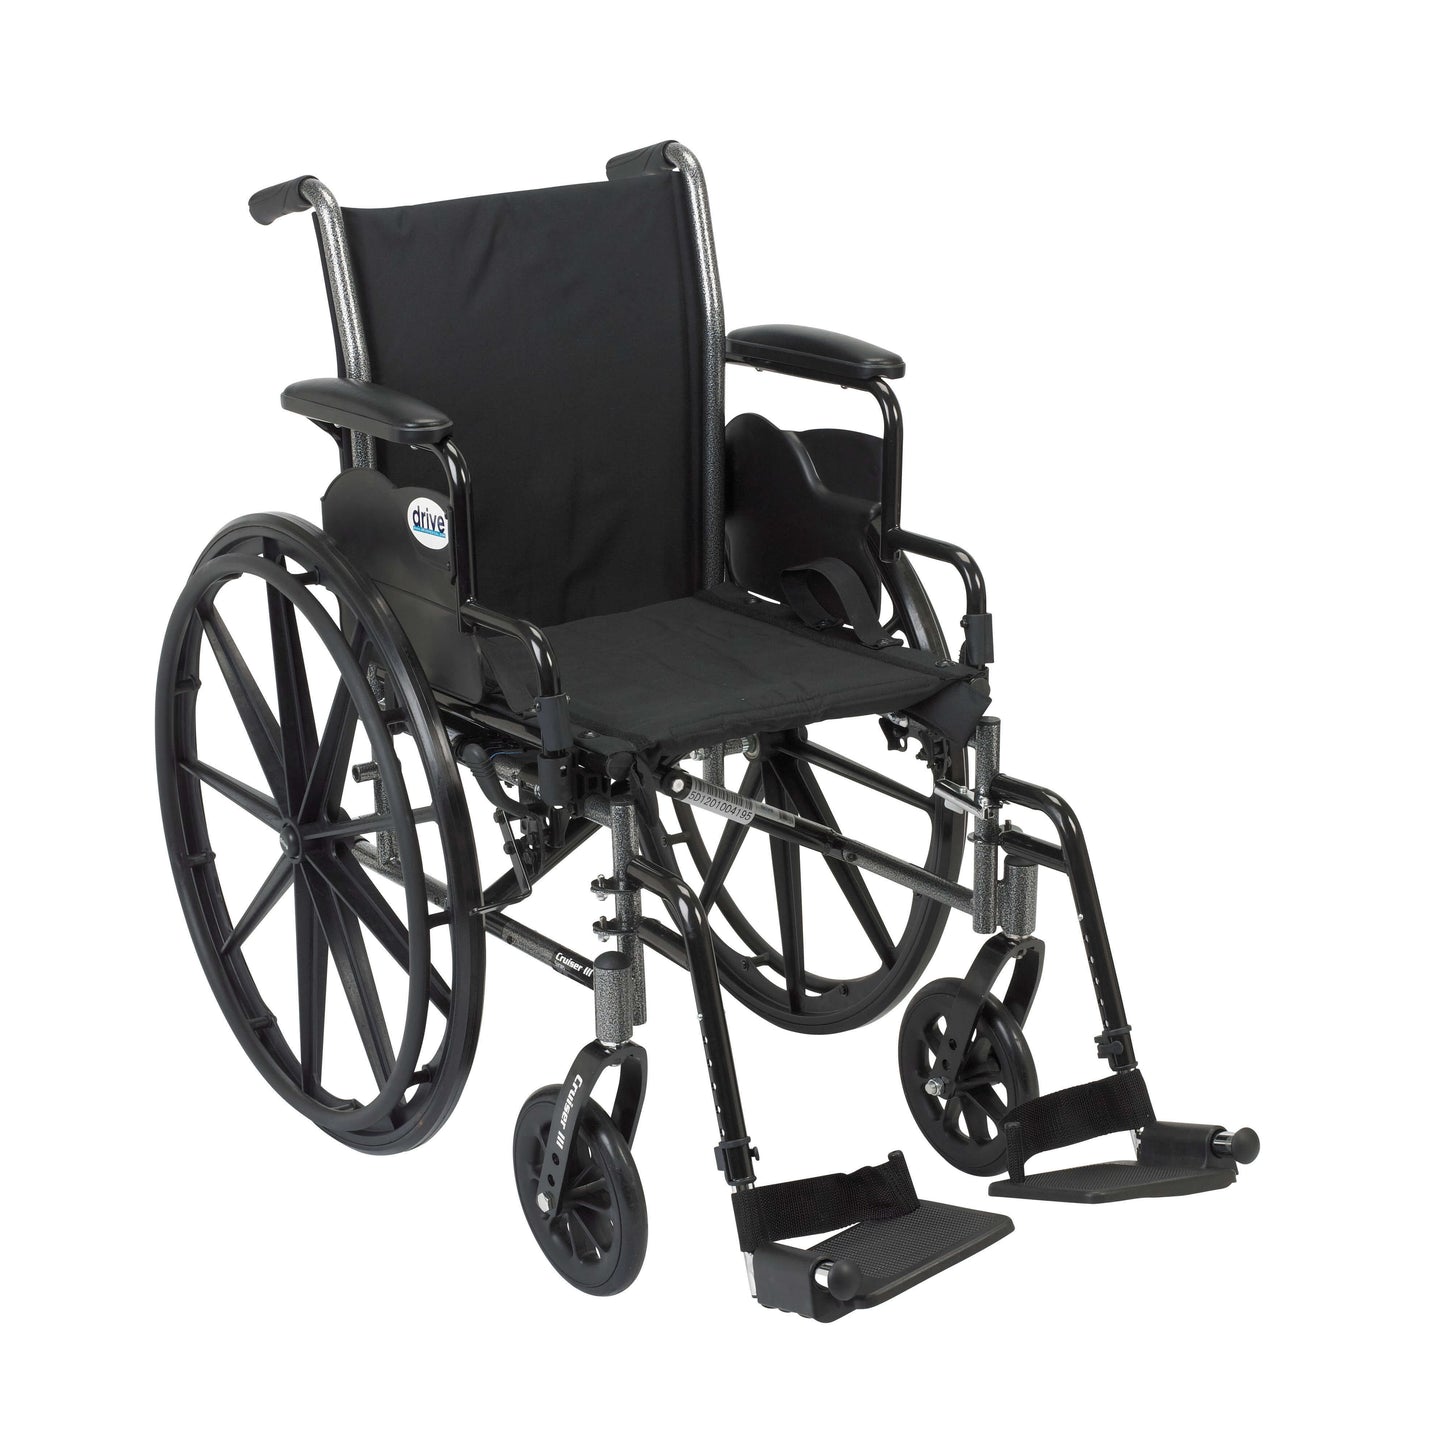 Cruiser III Wheelchair